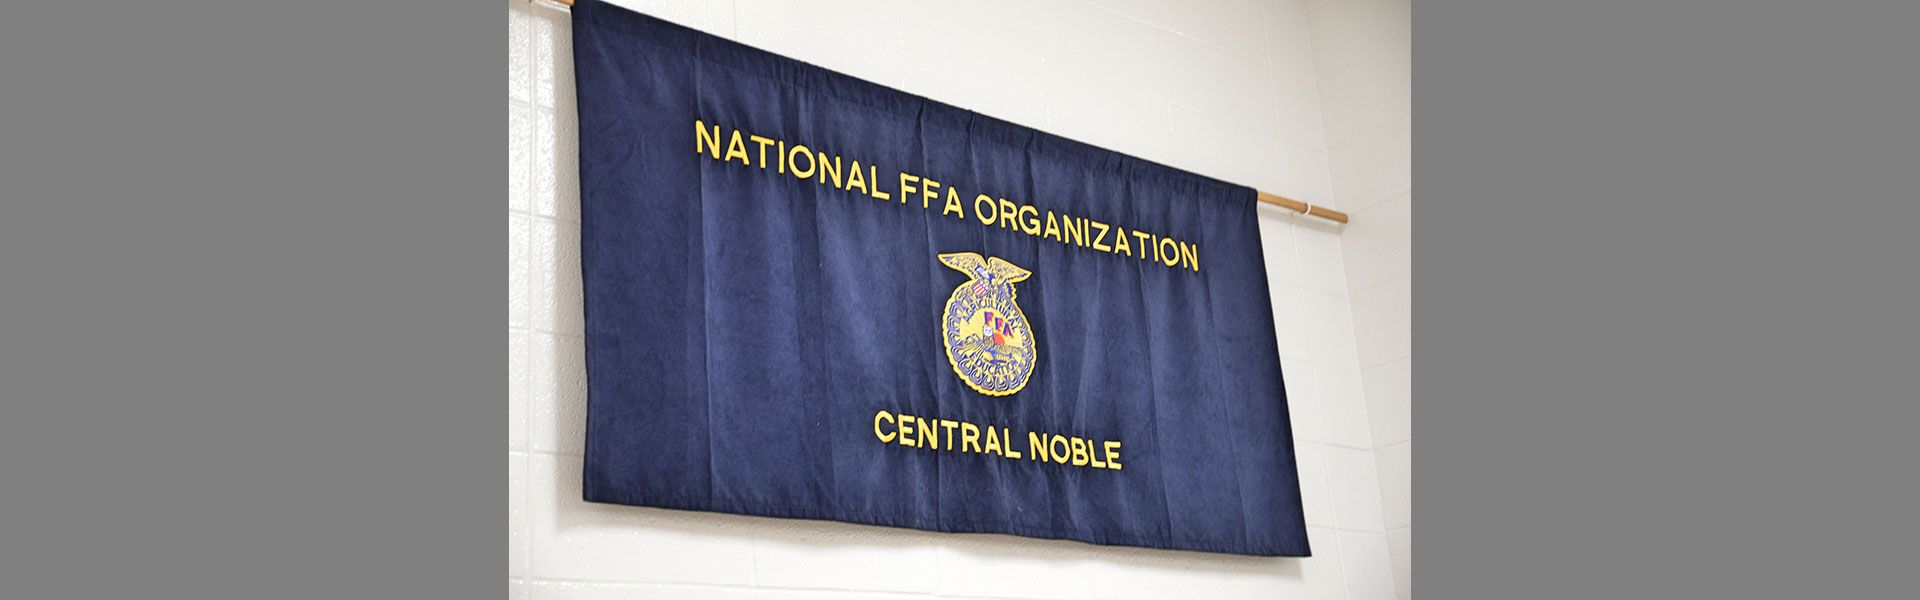 Ffa Banner